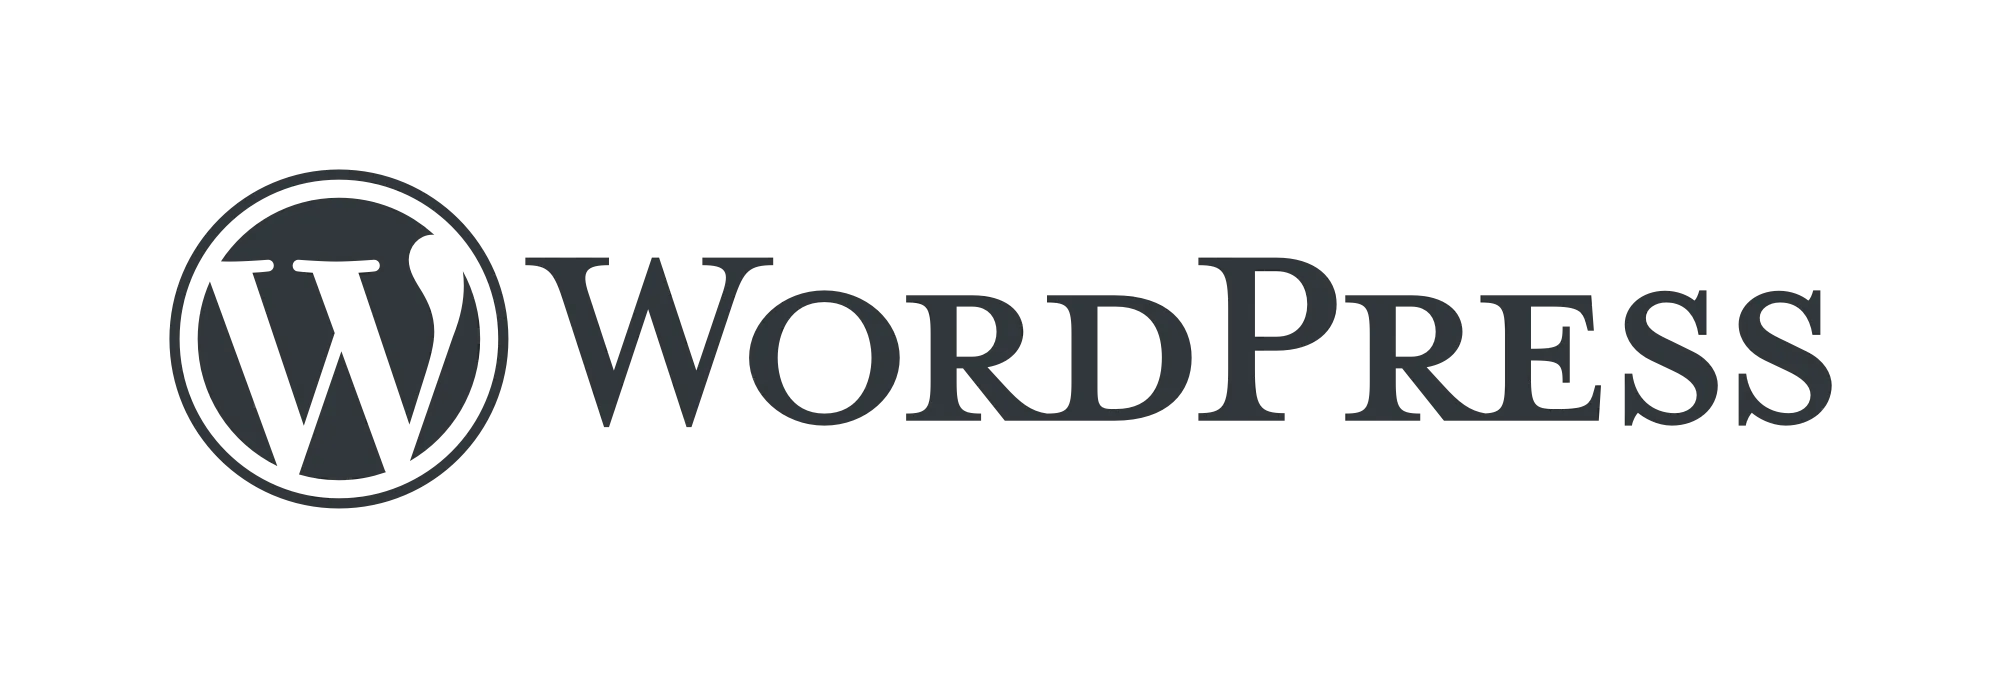 Wordpress Plugin logo